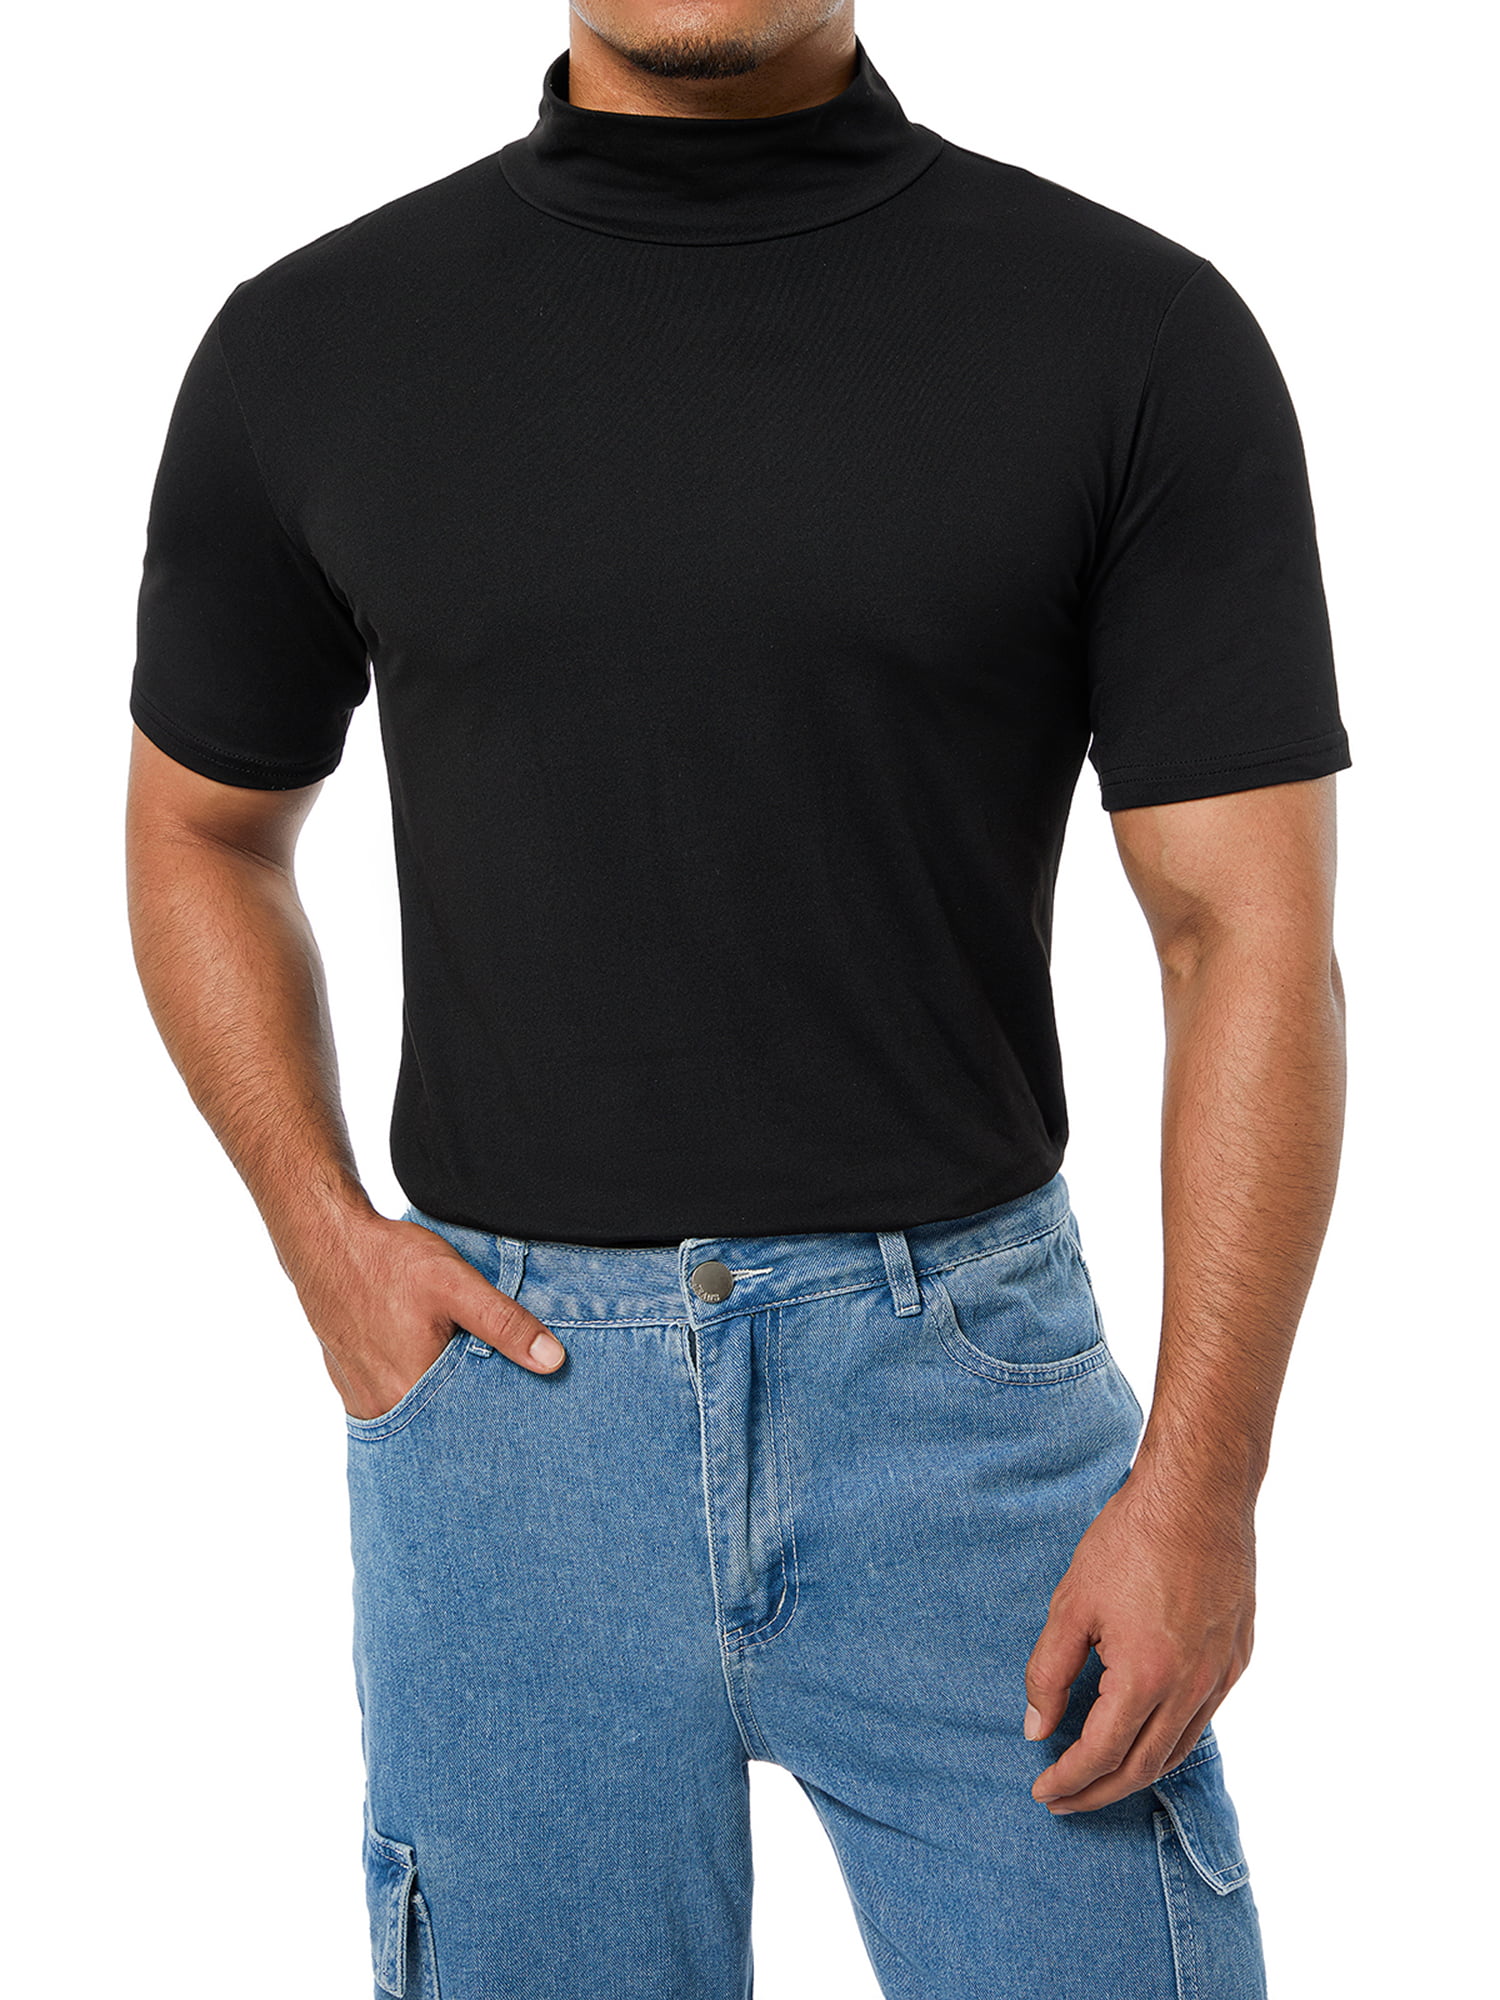 RYRJJ Mens Mock Turtleneck T-Shirt Short Sleeve Pullover Basic Designed  Undershirt Stretch Lightweight Slim Fit Athletic Muscle Tops(Black,3XL) 